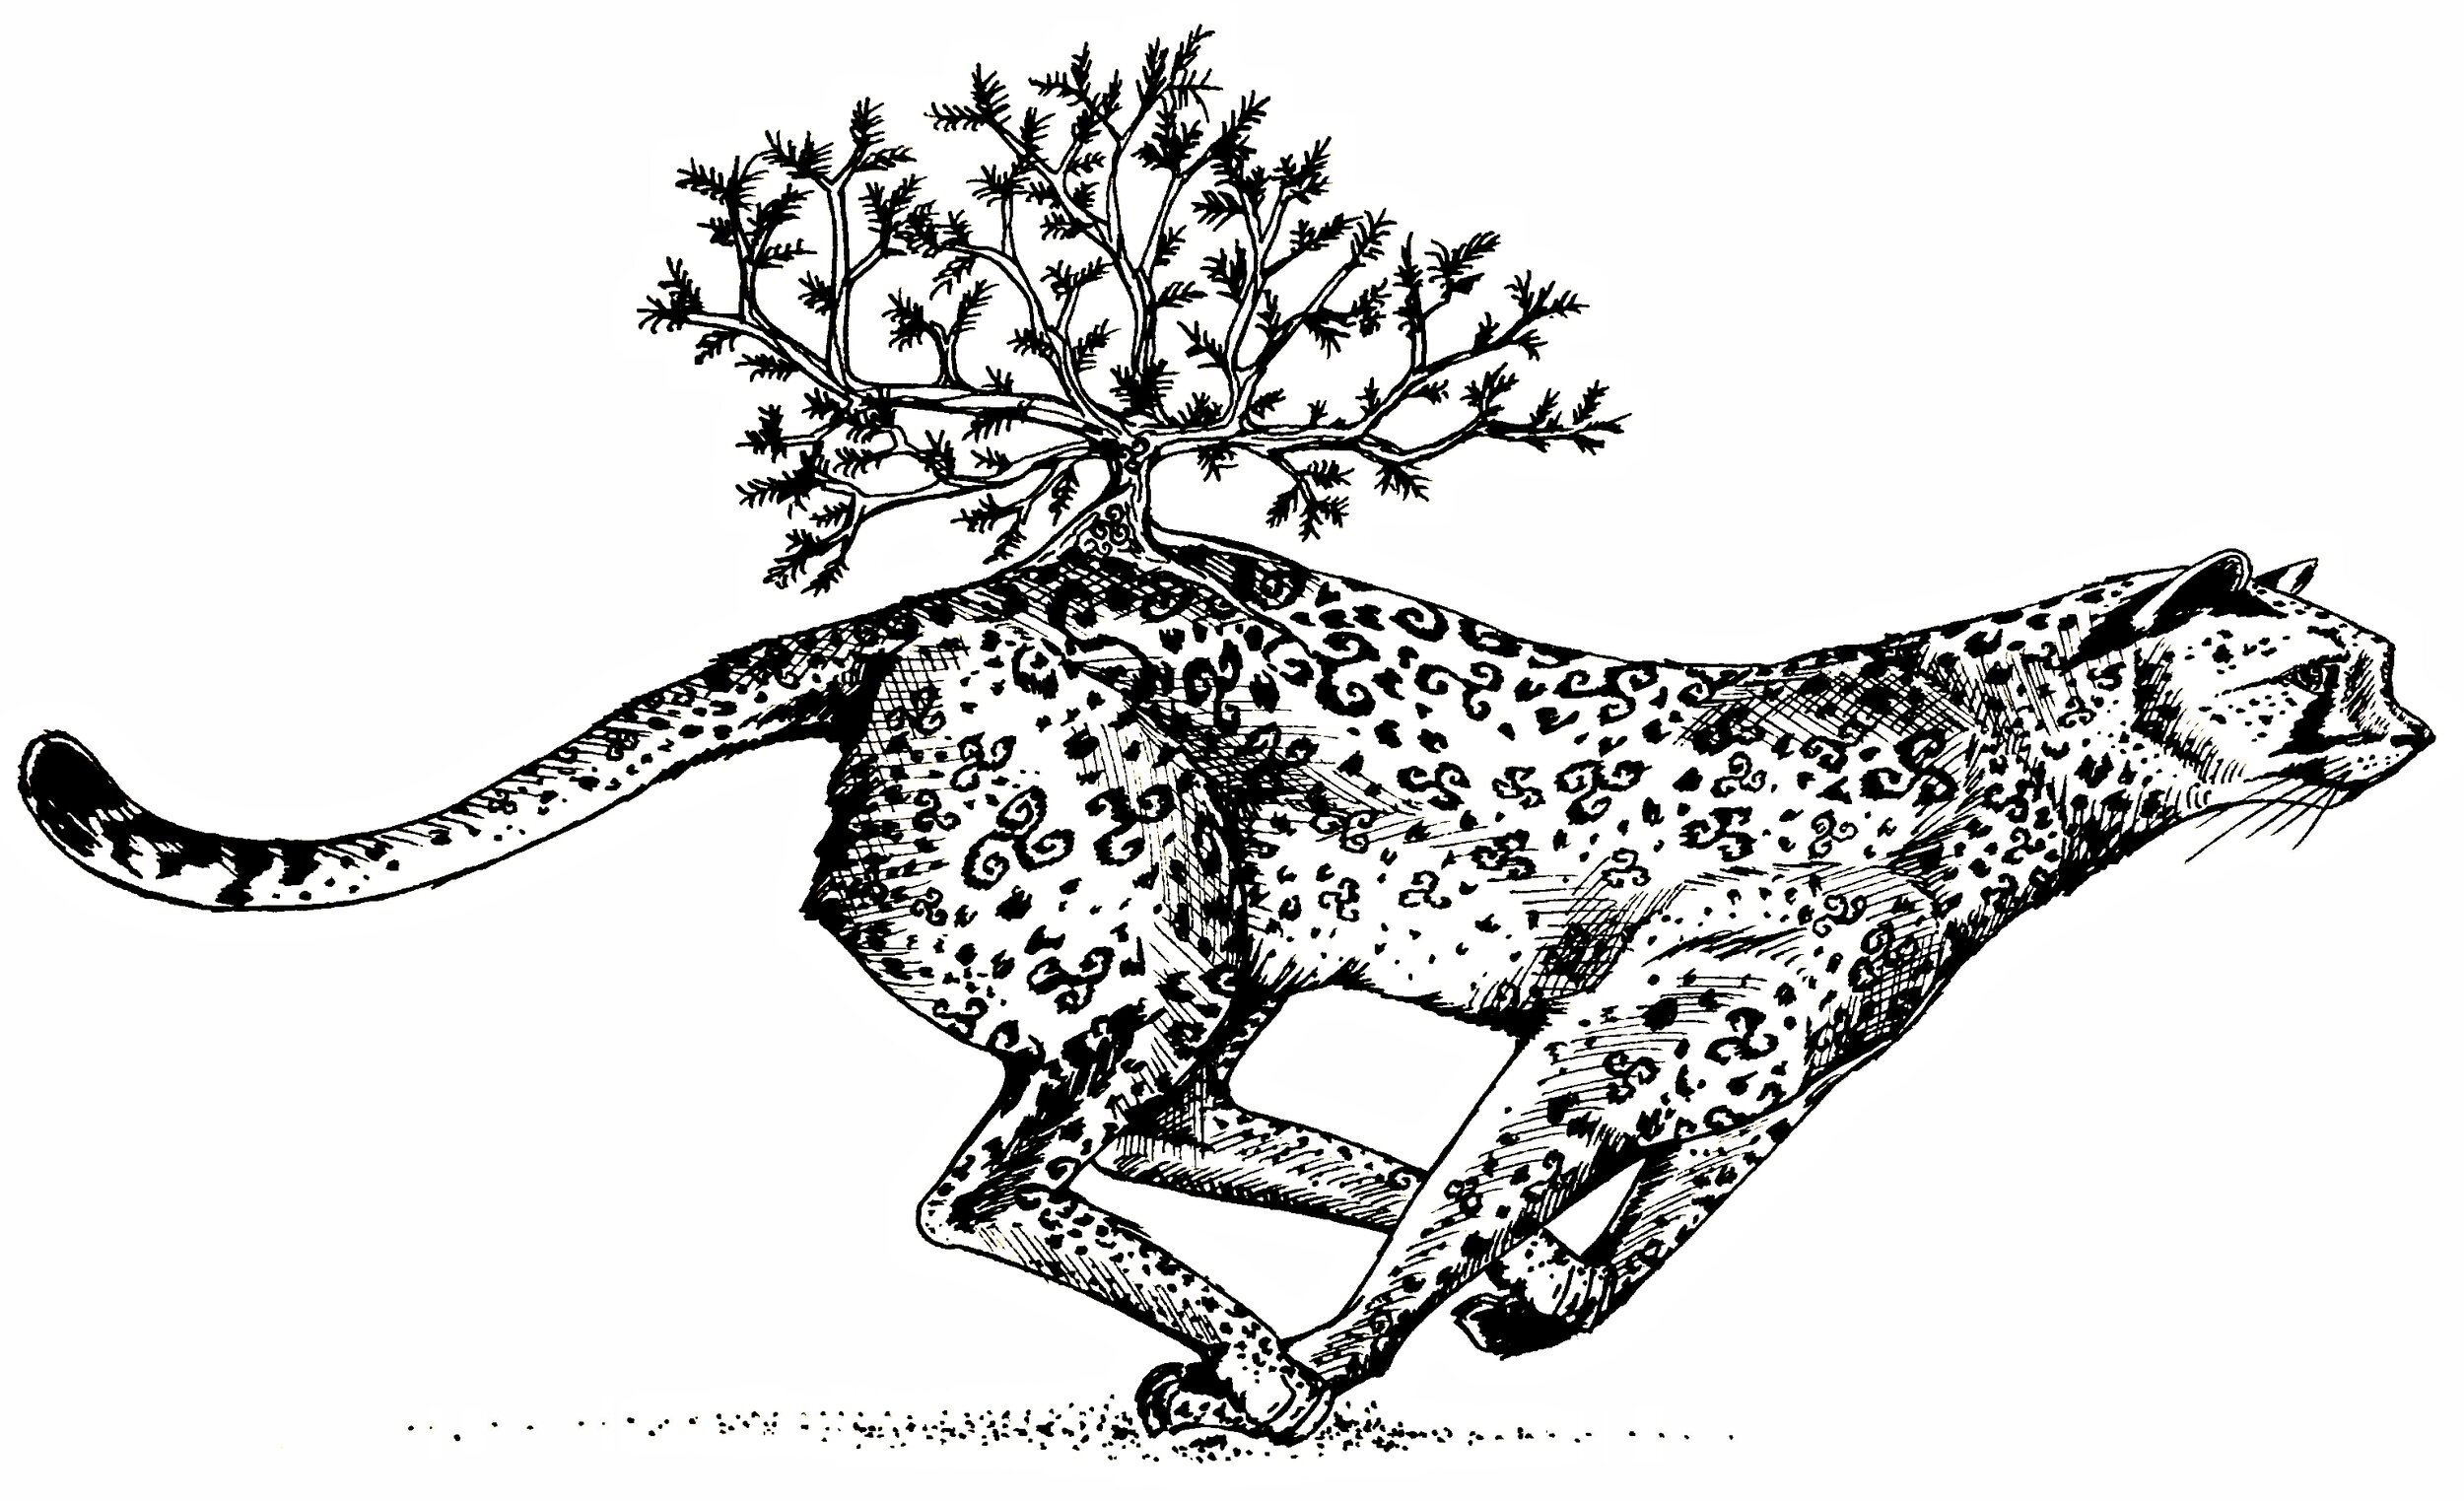 cheetah+tree.jpg